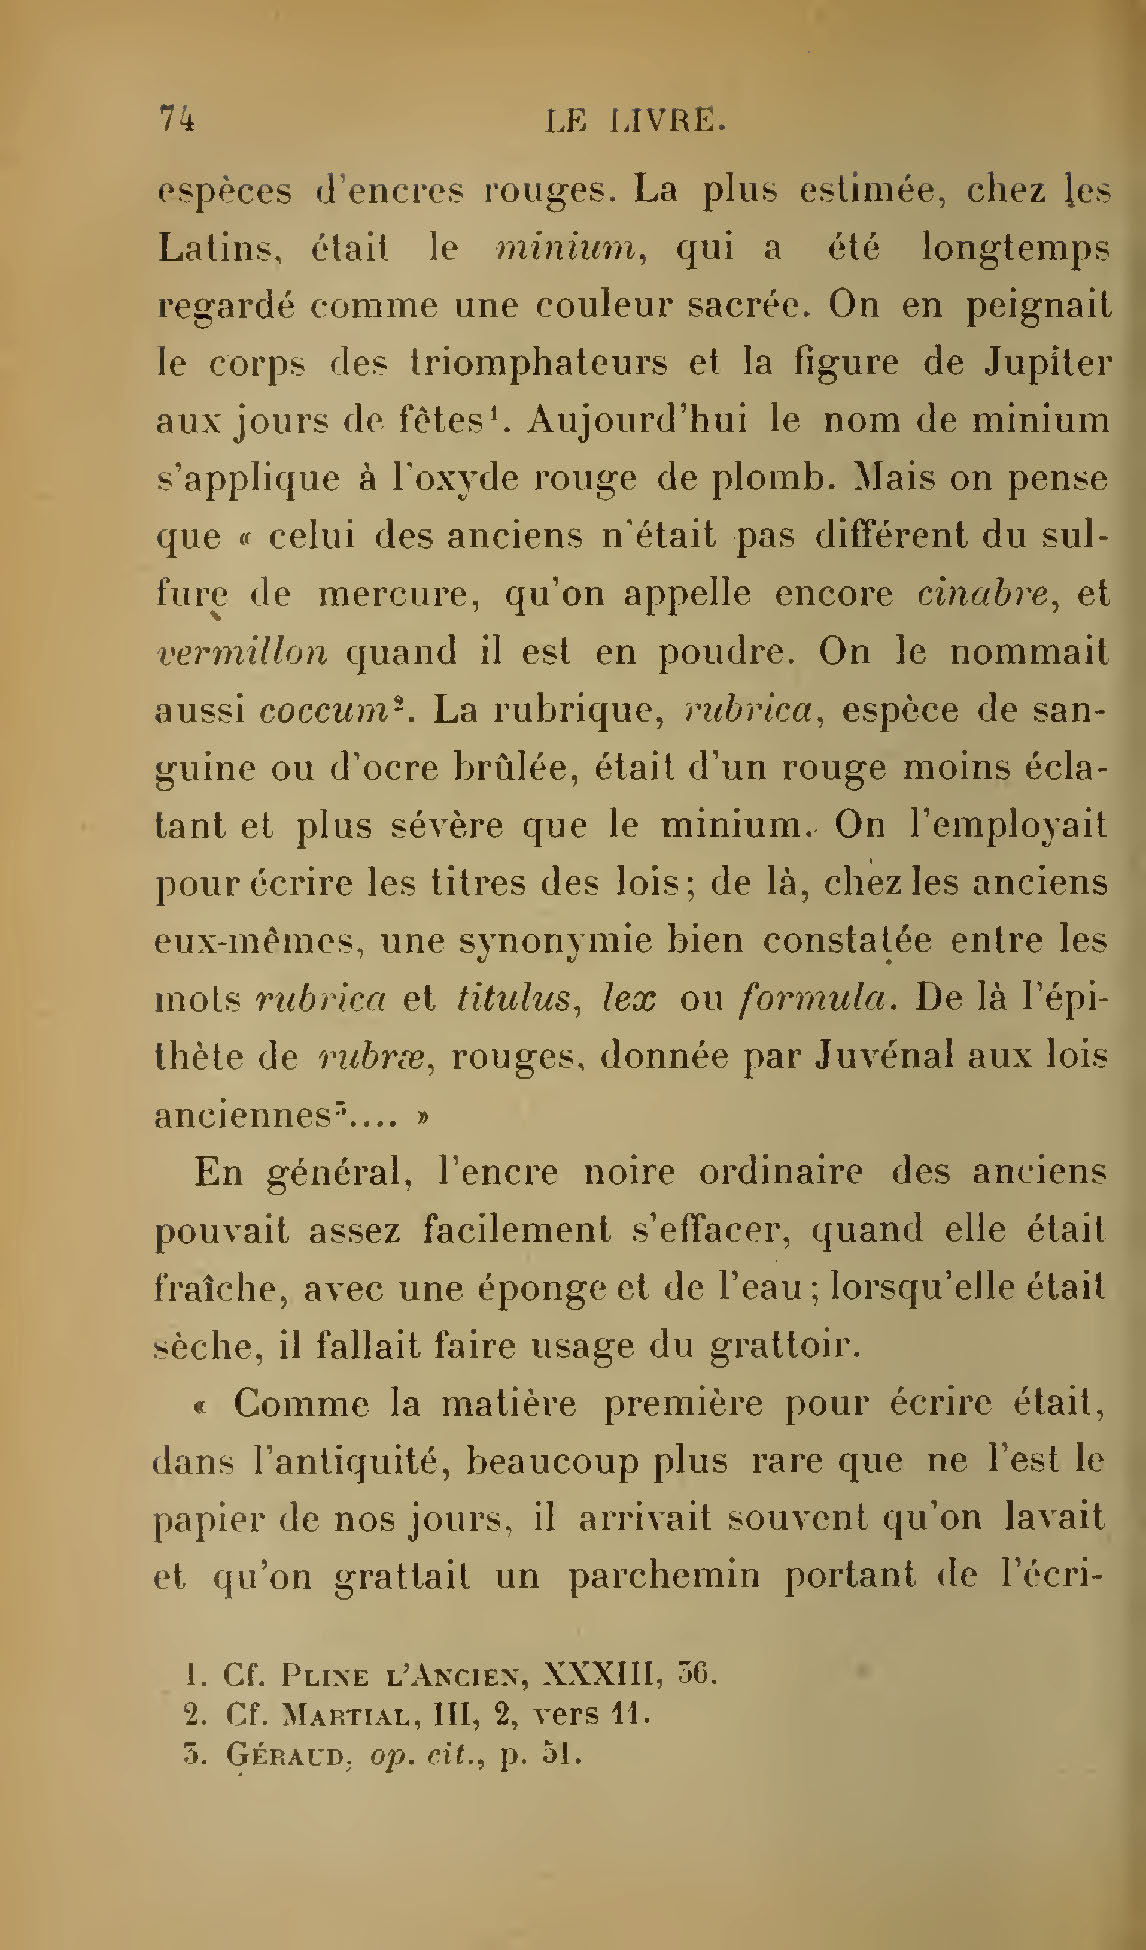 Albert Cim, Le Livre, t. I, p. 74.